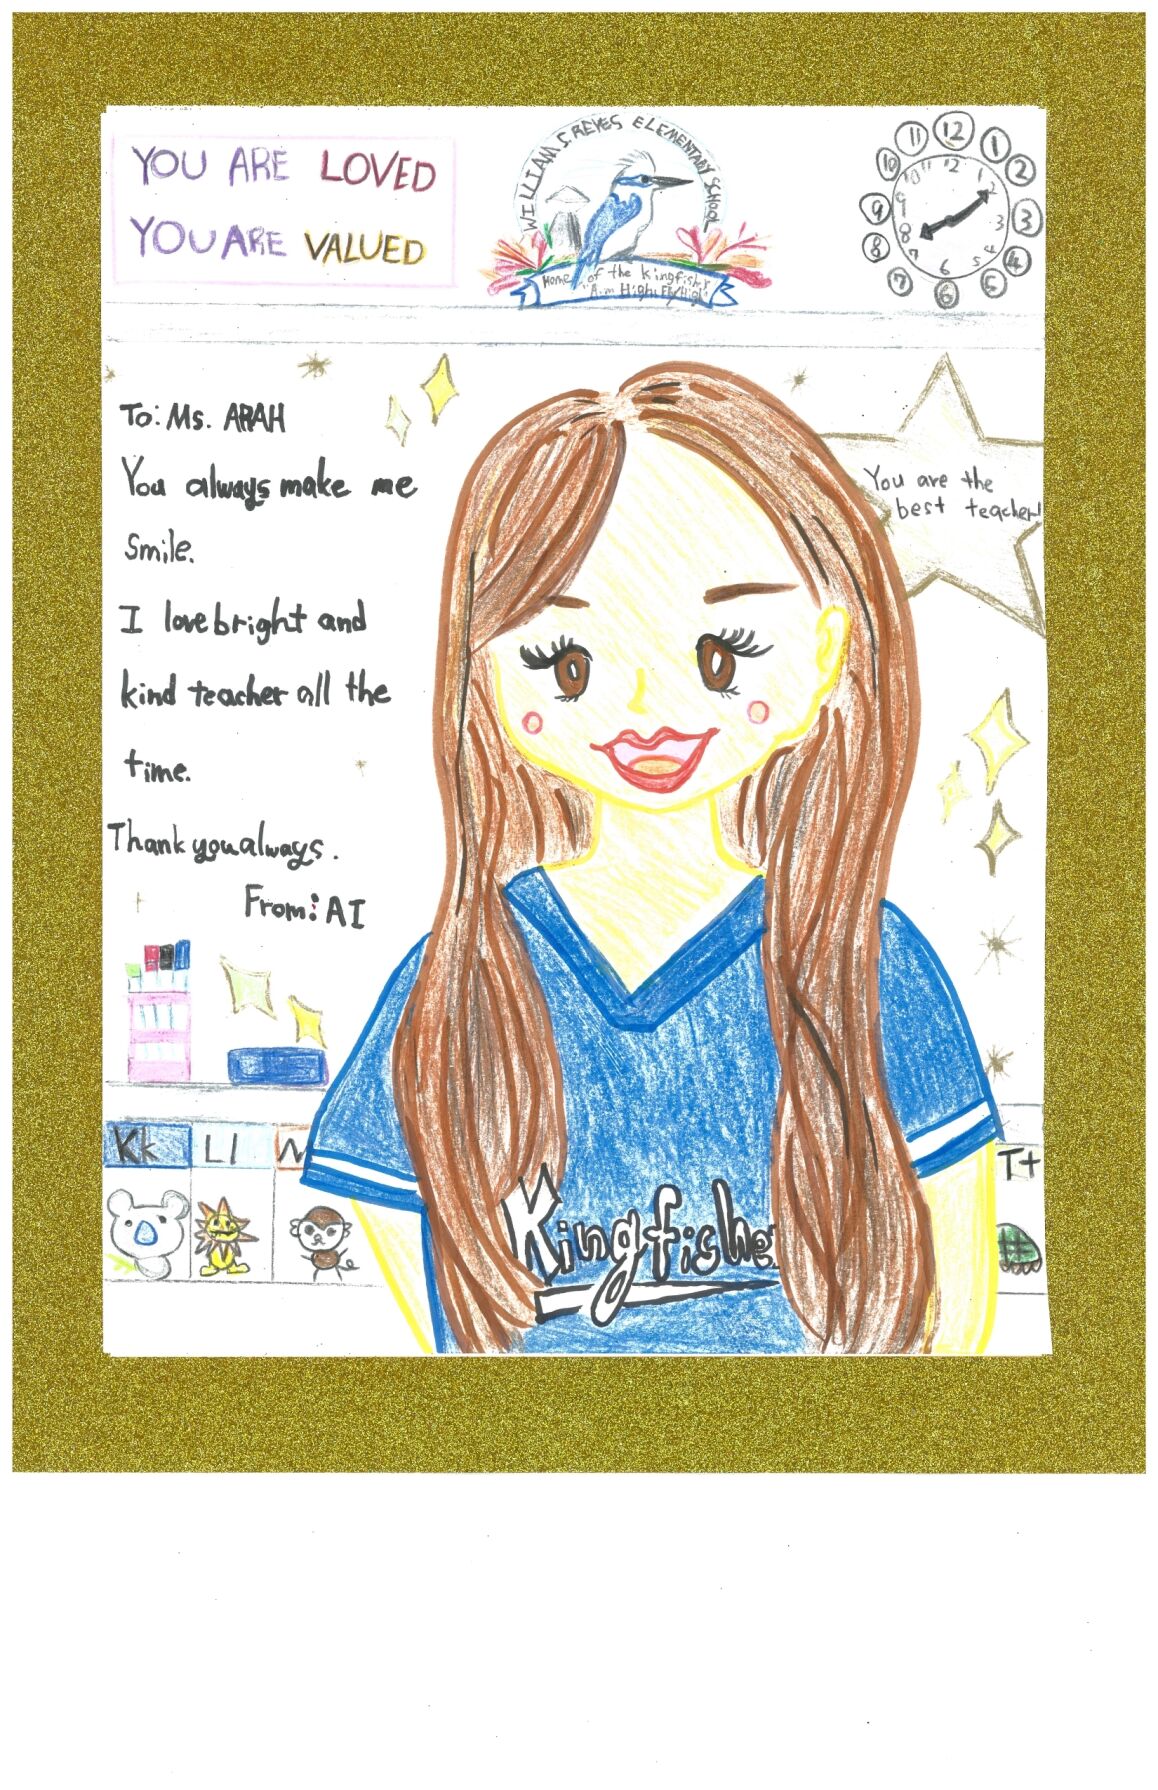 Doodles for teacher's day - Teacher's day card doodles - YouTube